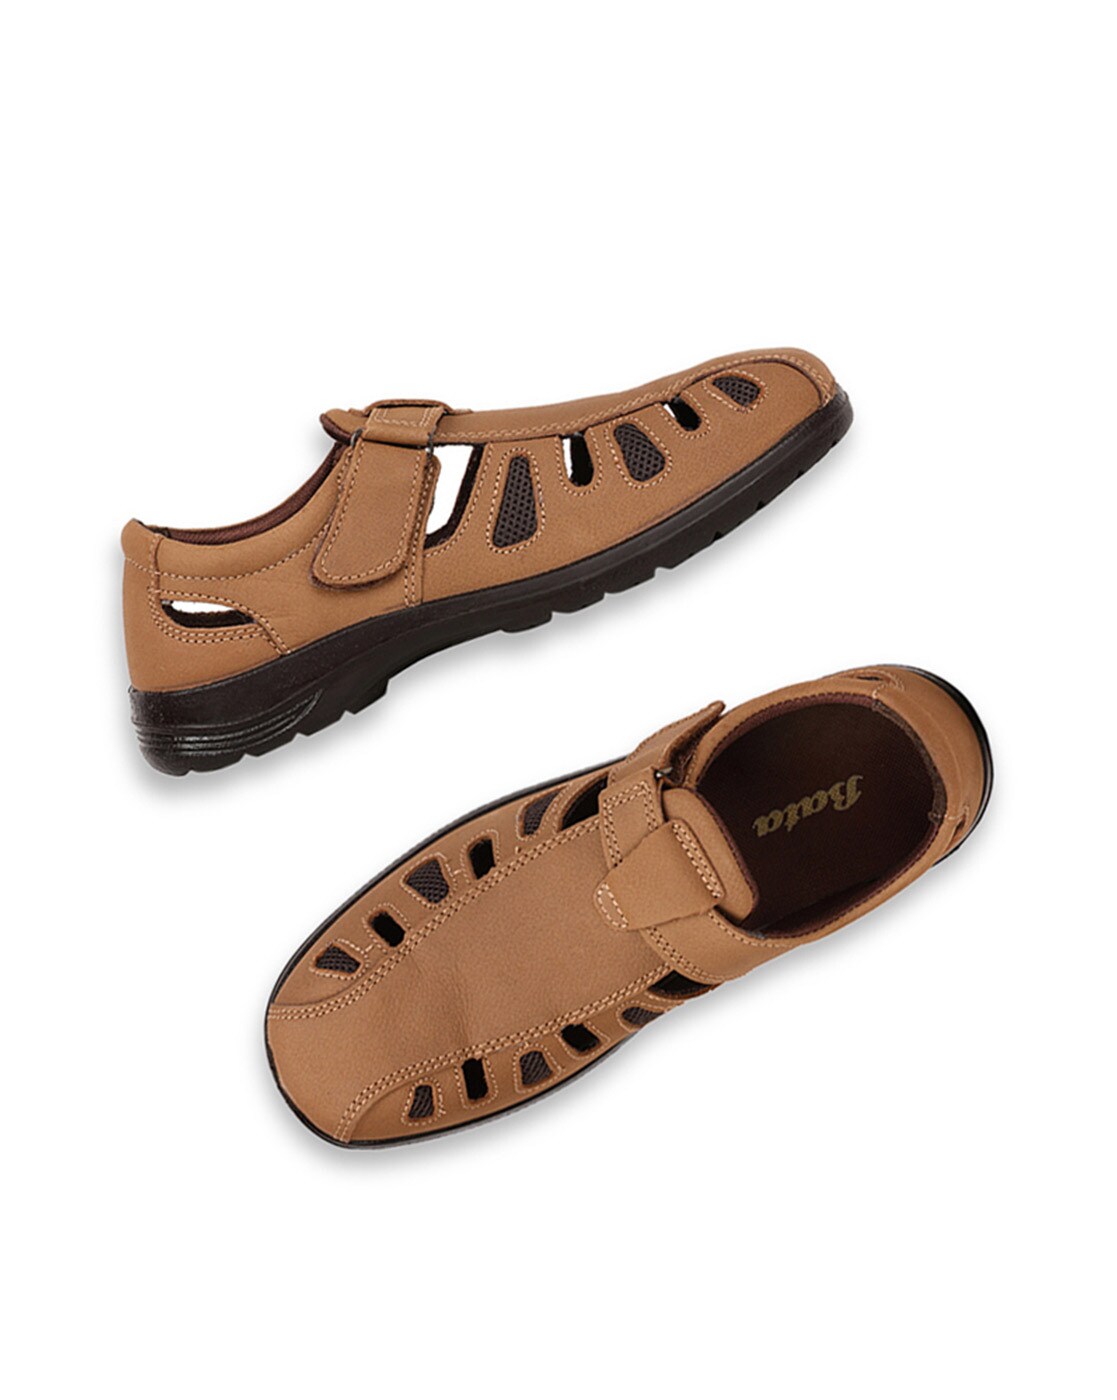 bata leather sandals